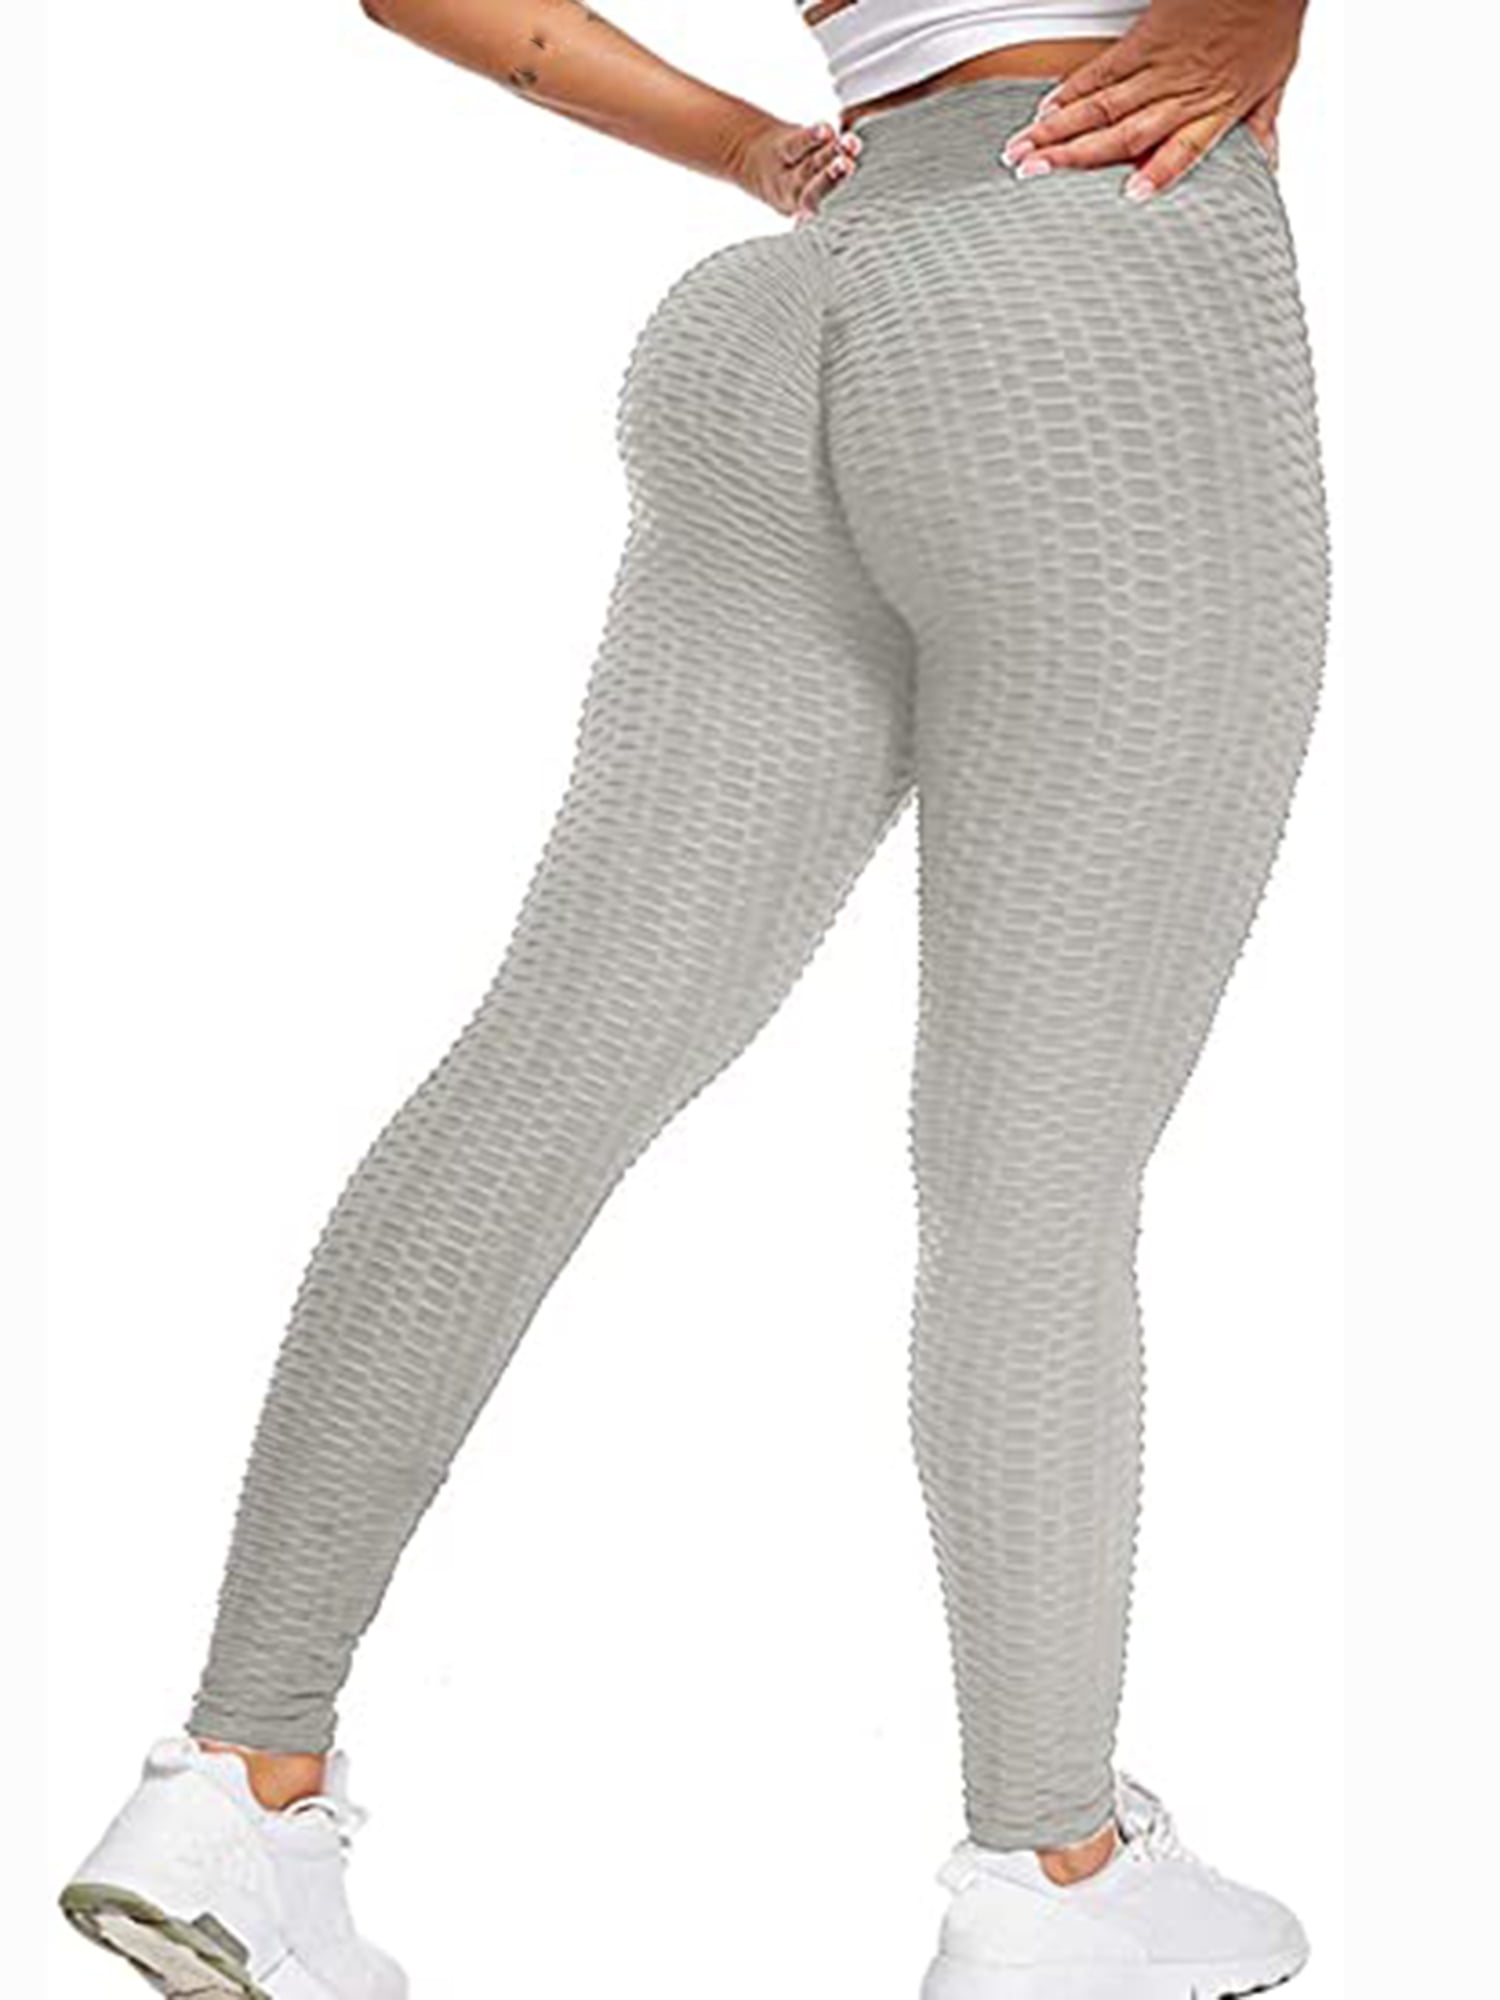 LELINTA Women Sports Yoga Workout Gym Fitness Tummy Control Leggings Pants  Butt Lifting Athletic Clothes, Black, S-XL 